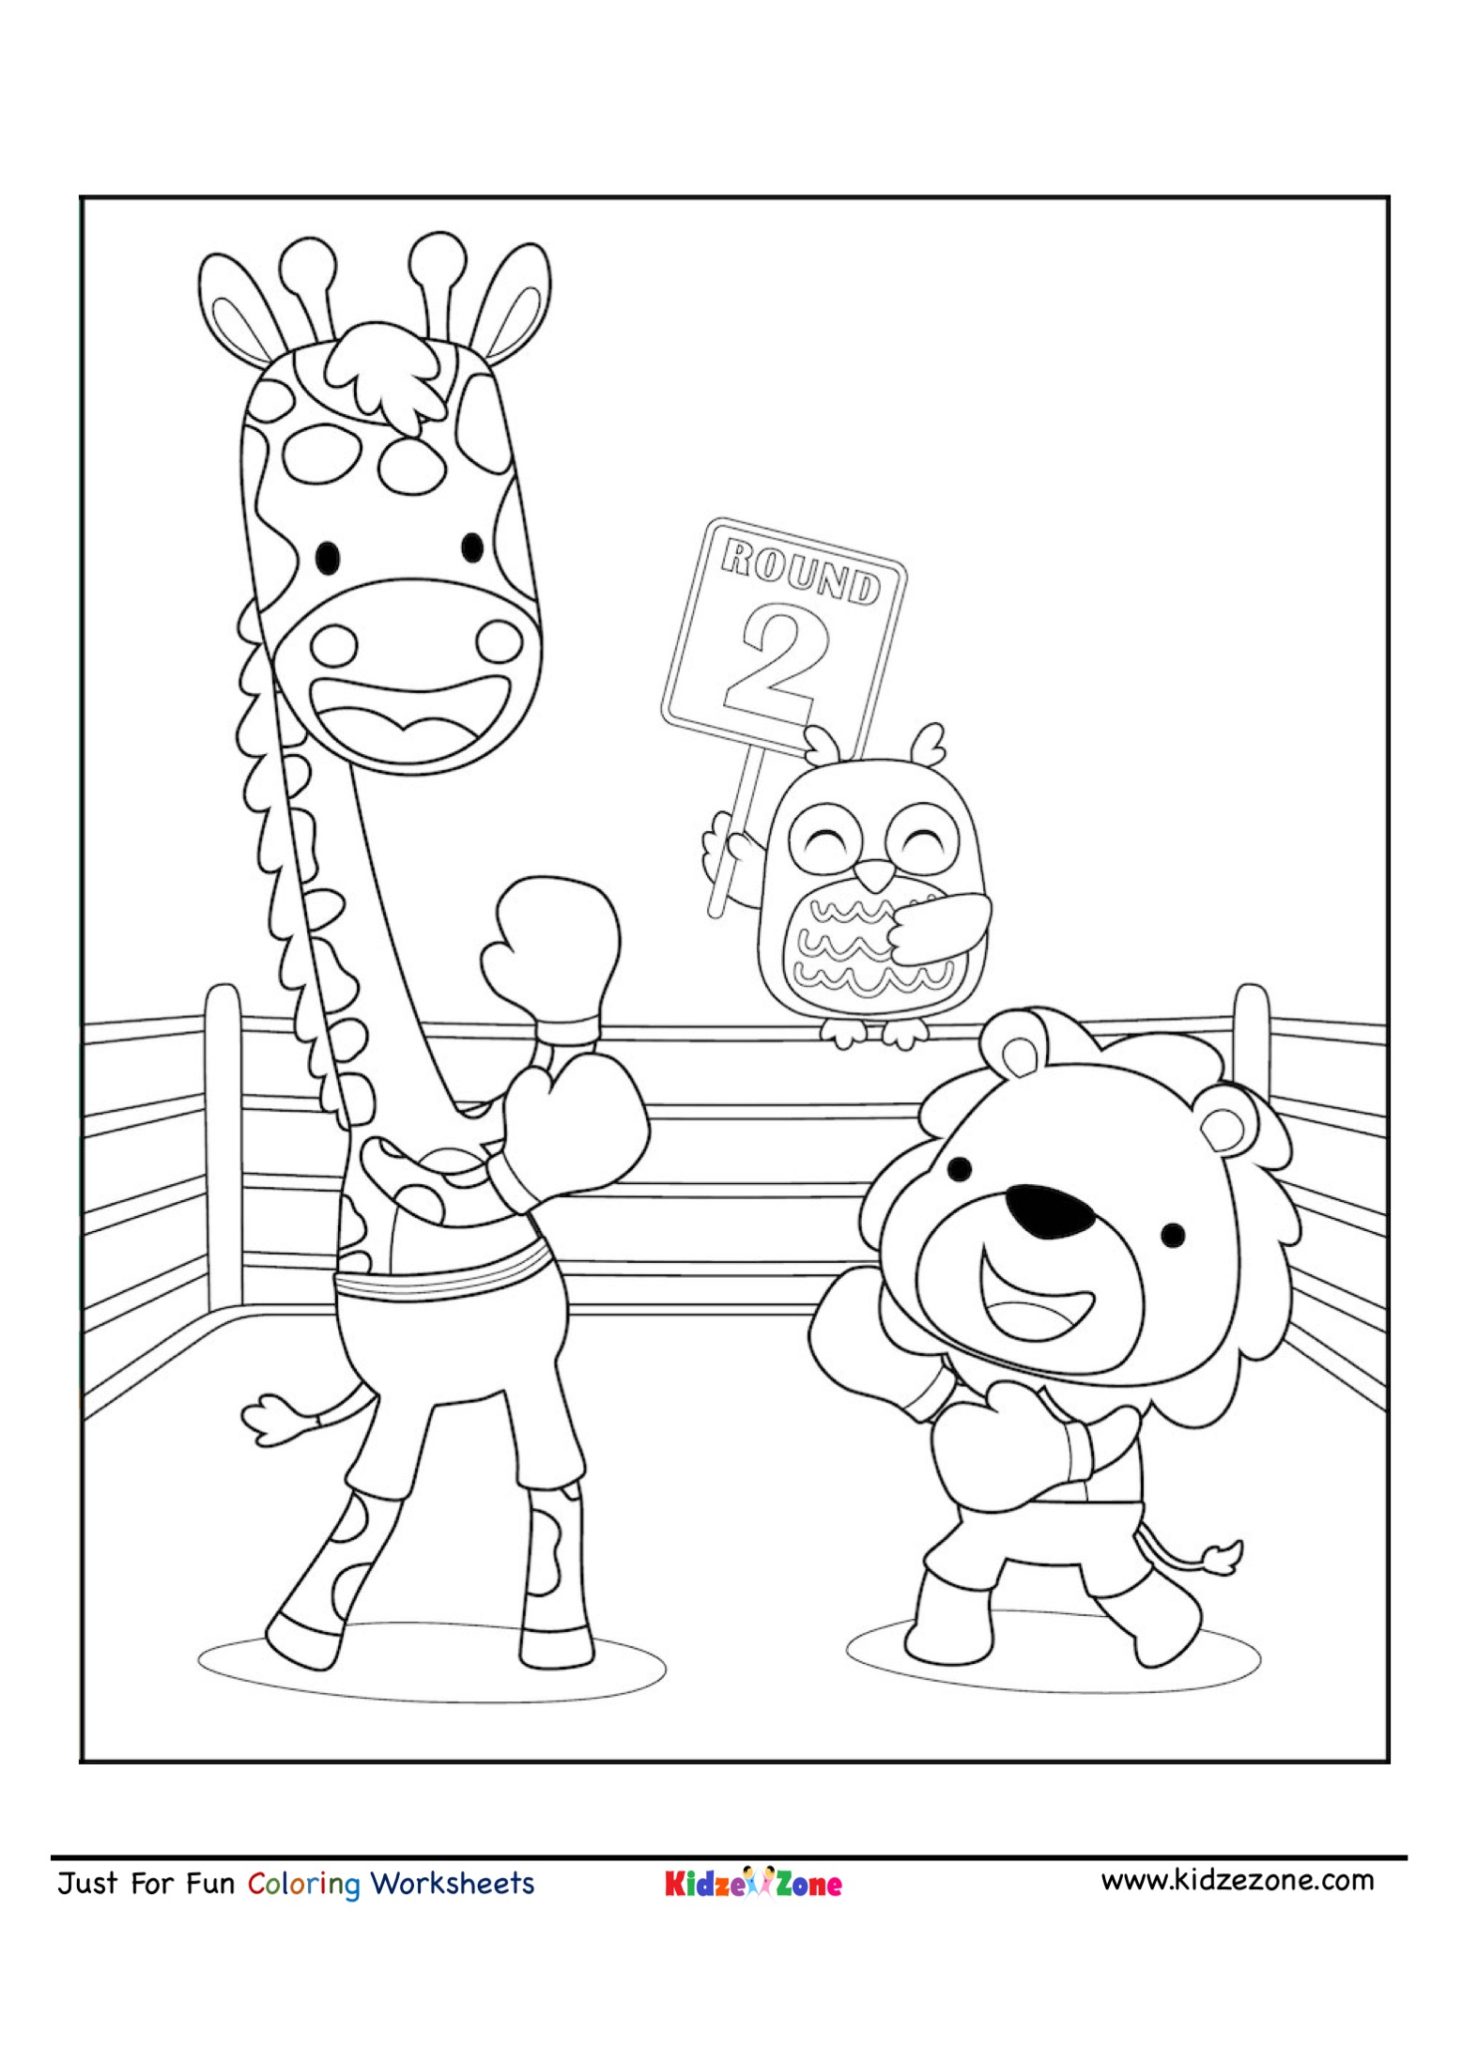 Boxing Match Coloring Page - KidzeZone